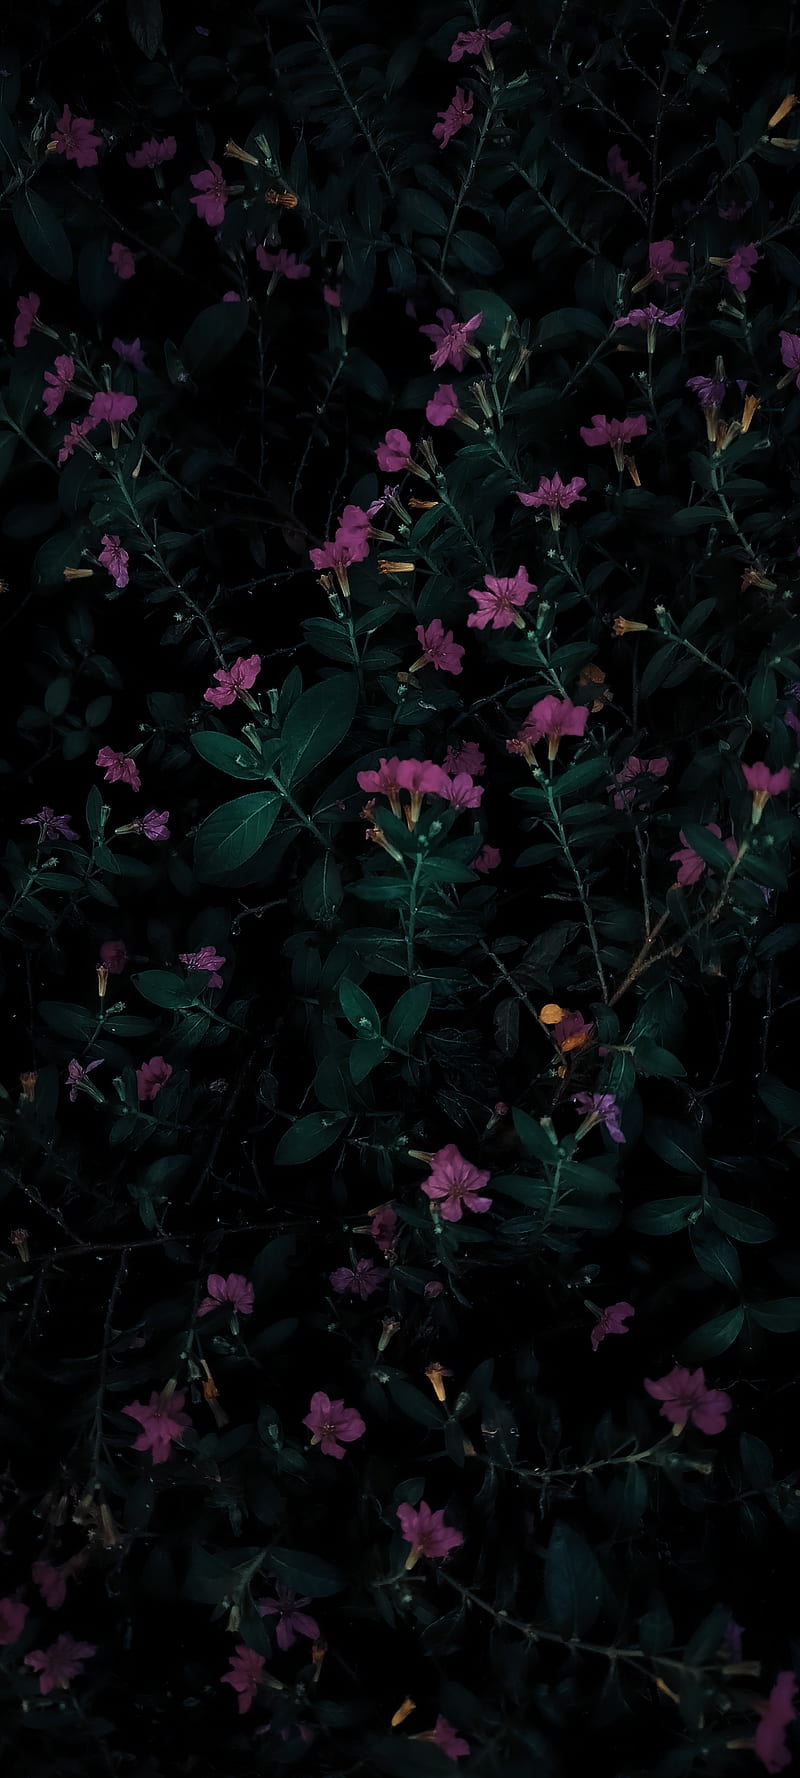 Dark Flower Images  Free Download on Freepik